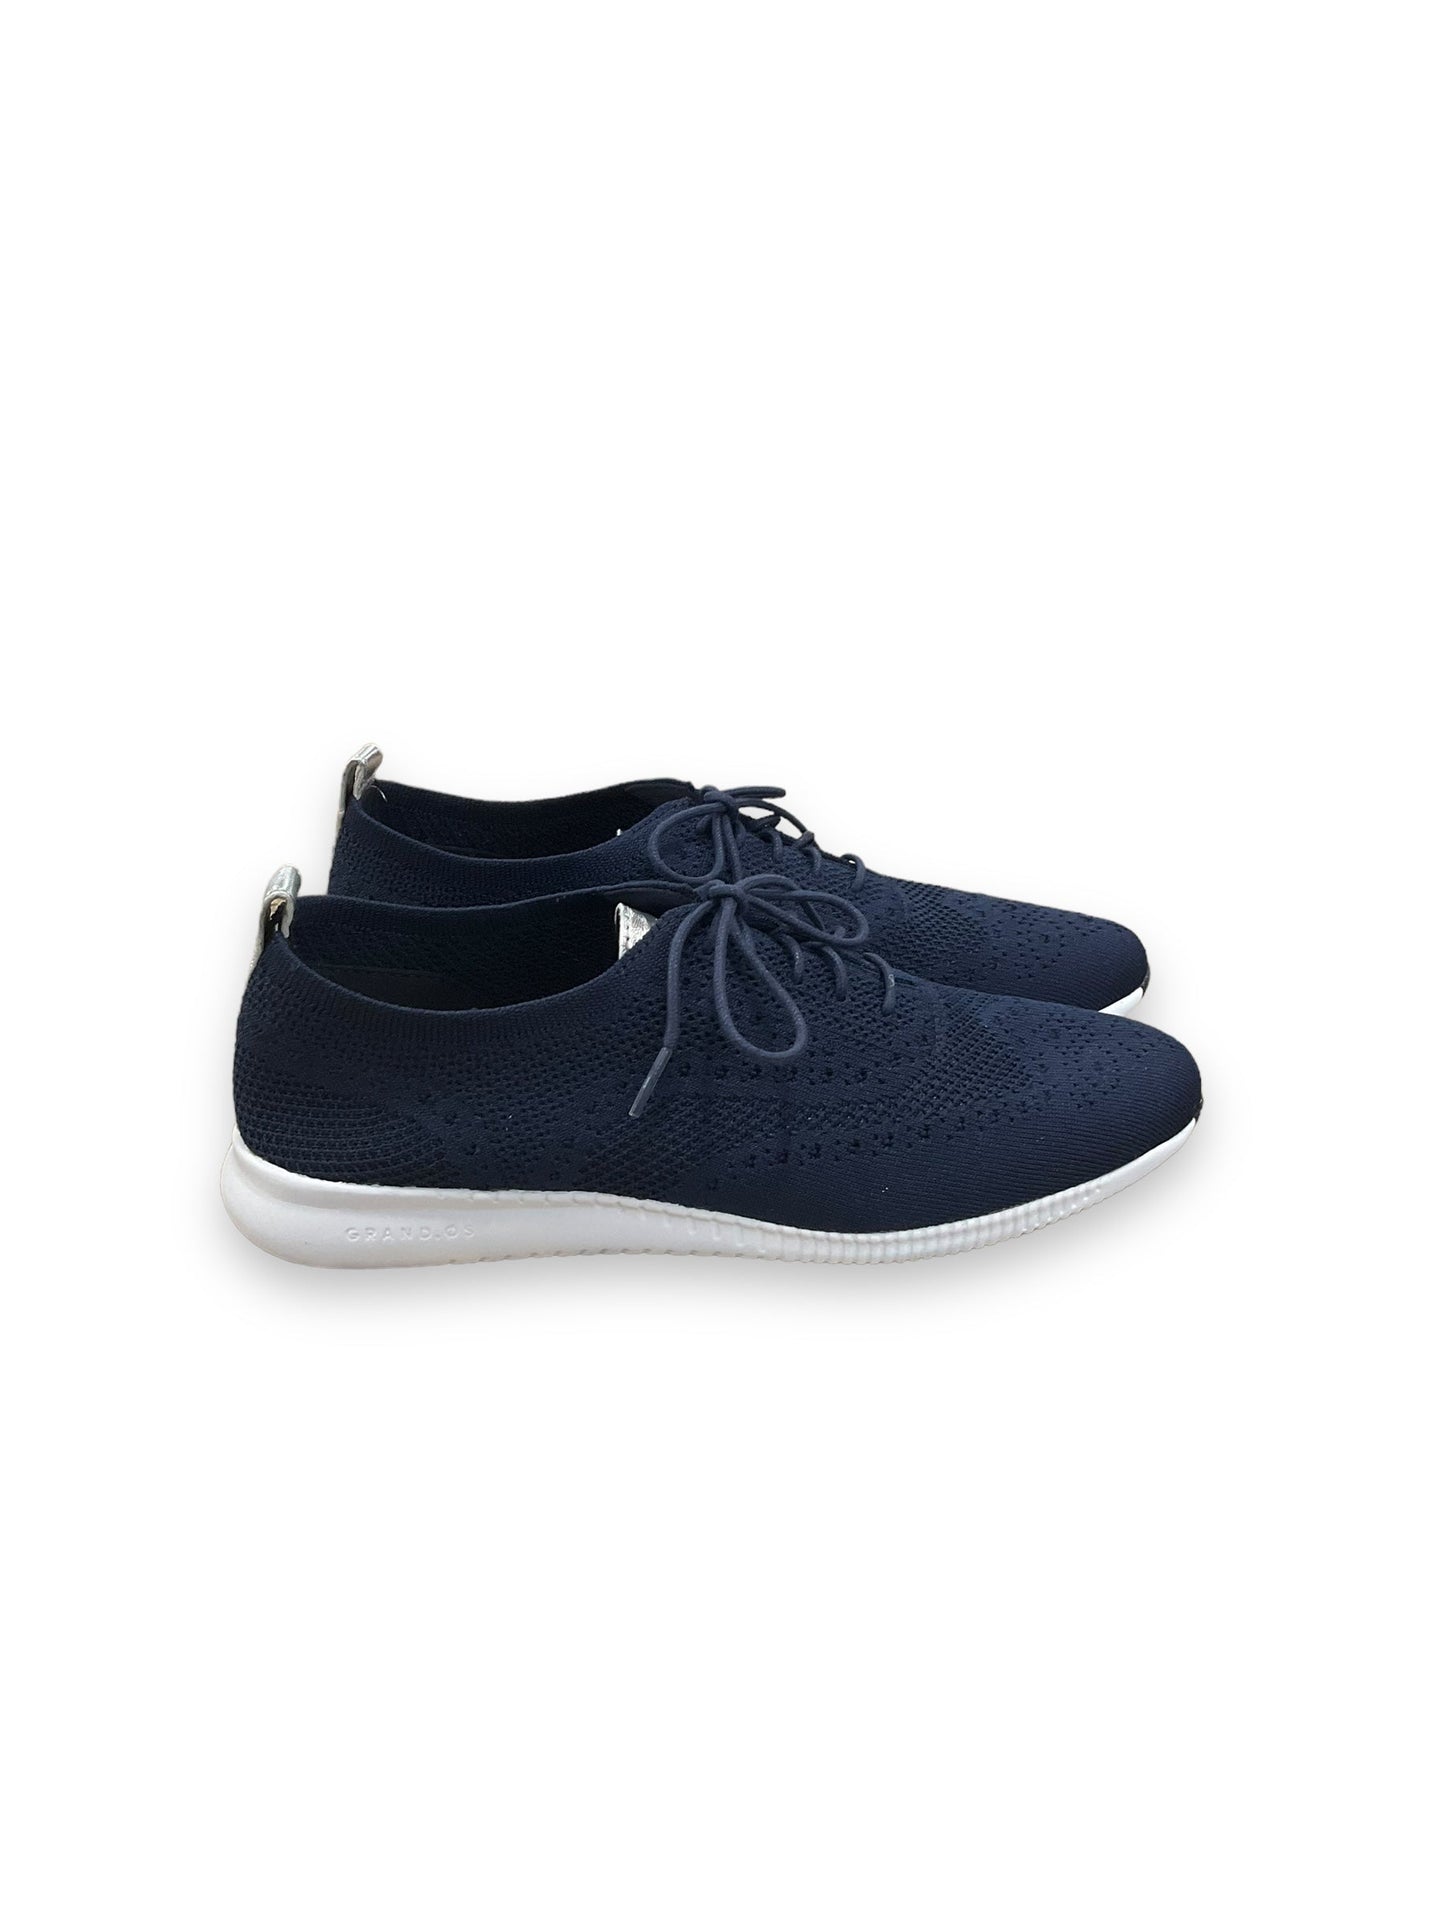 Blue Shoes Athletic Cole-haan, Size 10